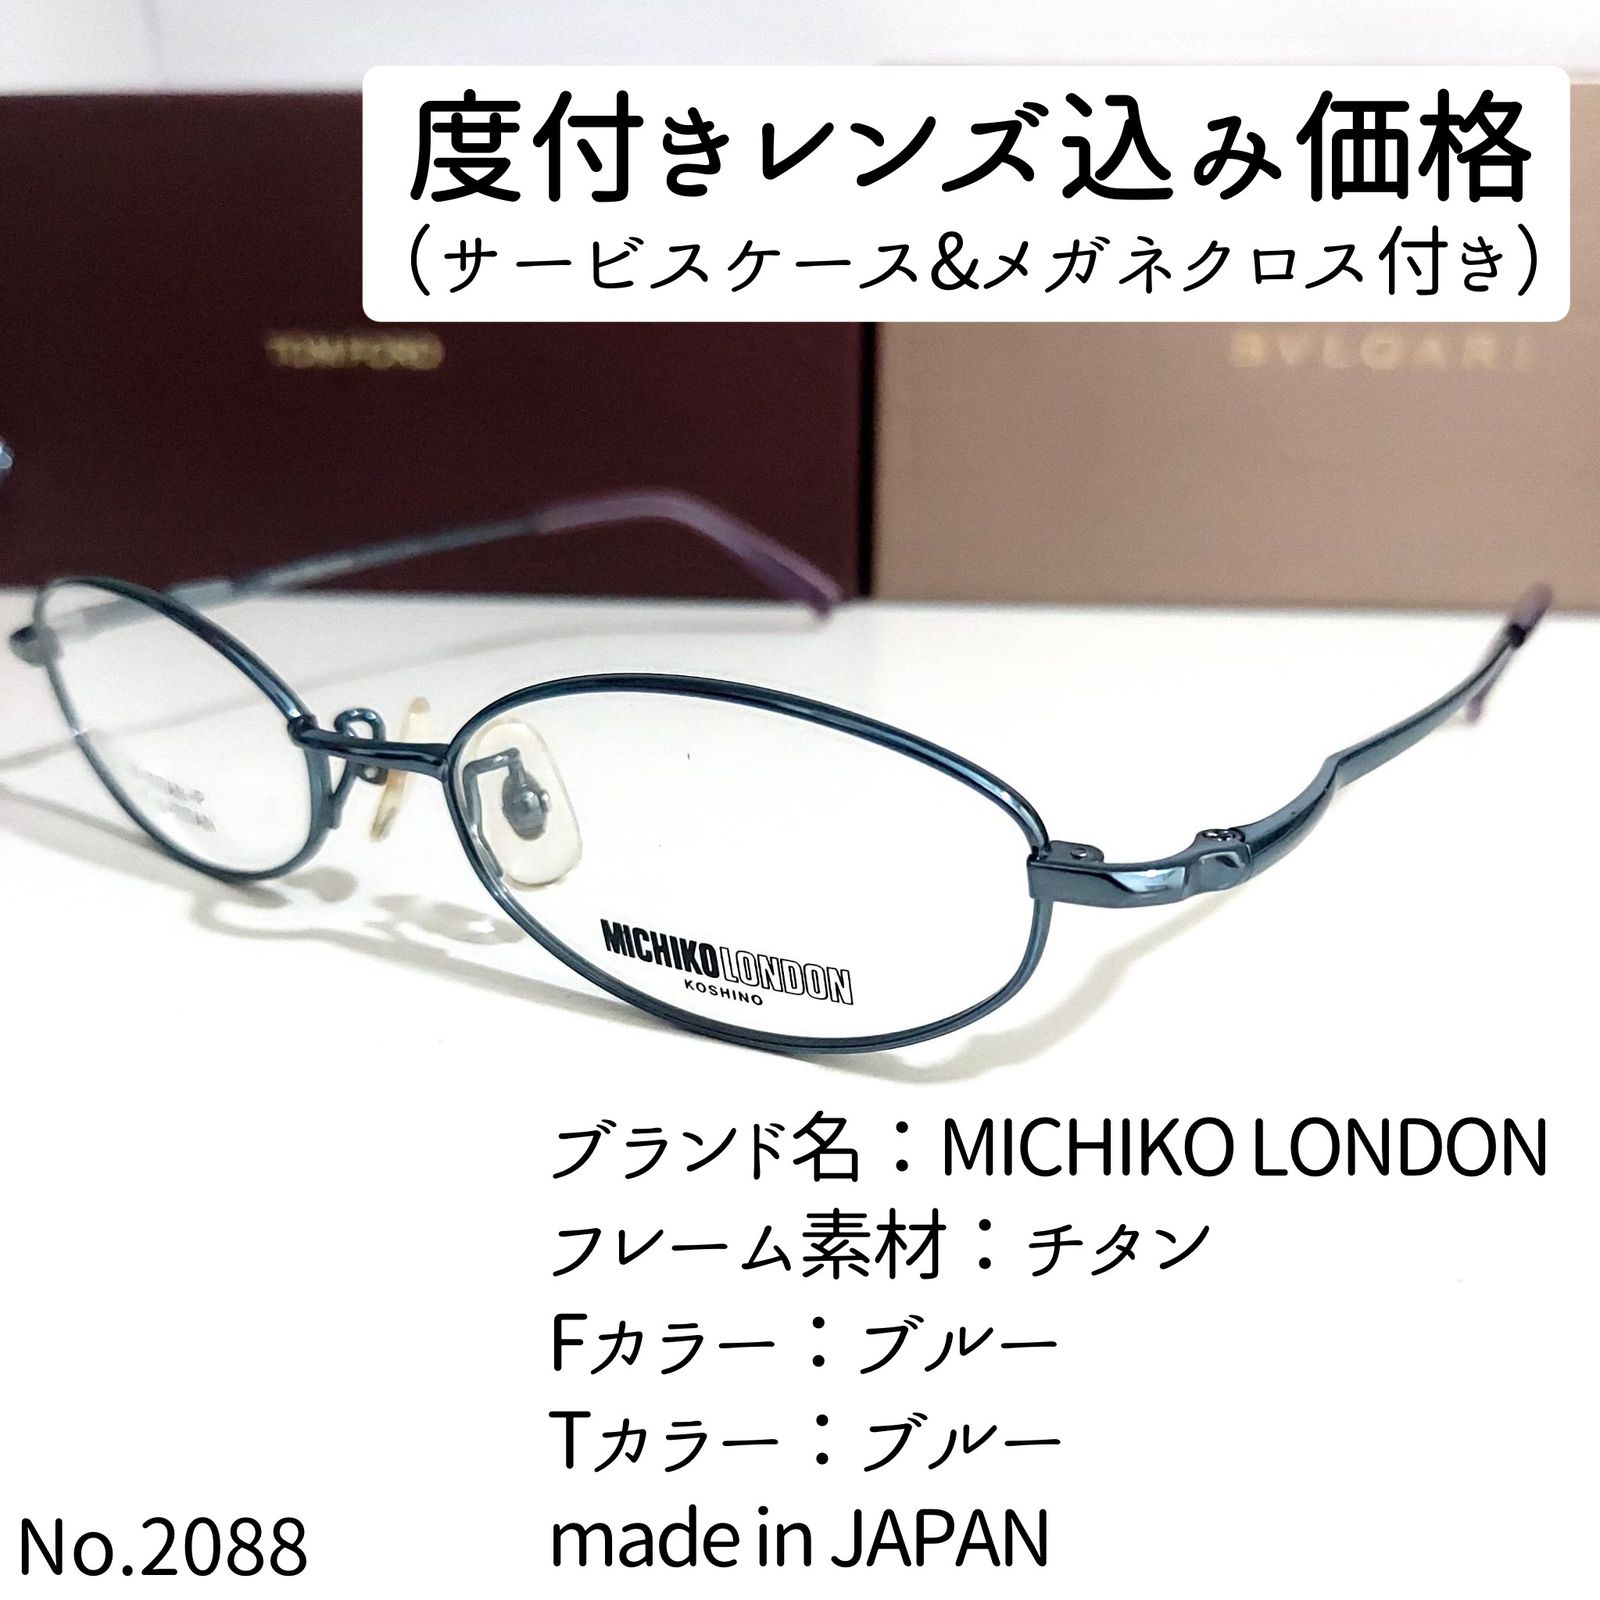 No.2088+メガネ MICHIKO LONDON【度数入り込み価格】-